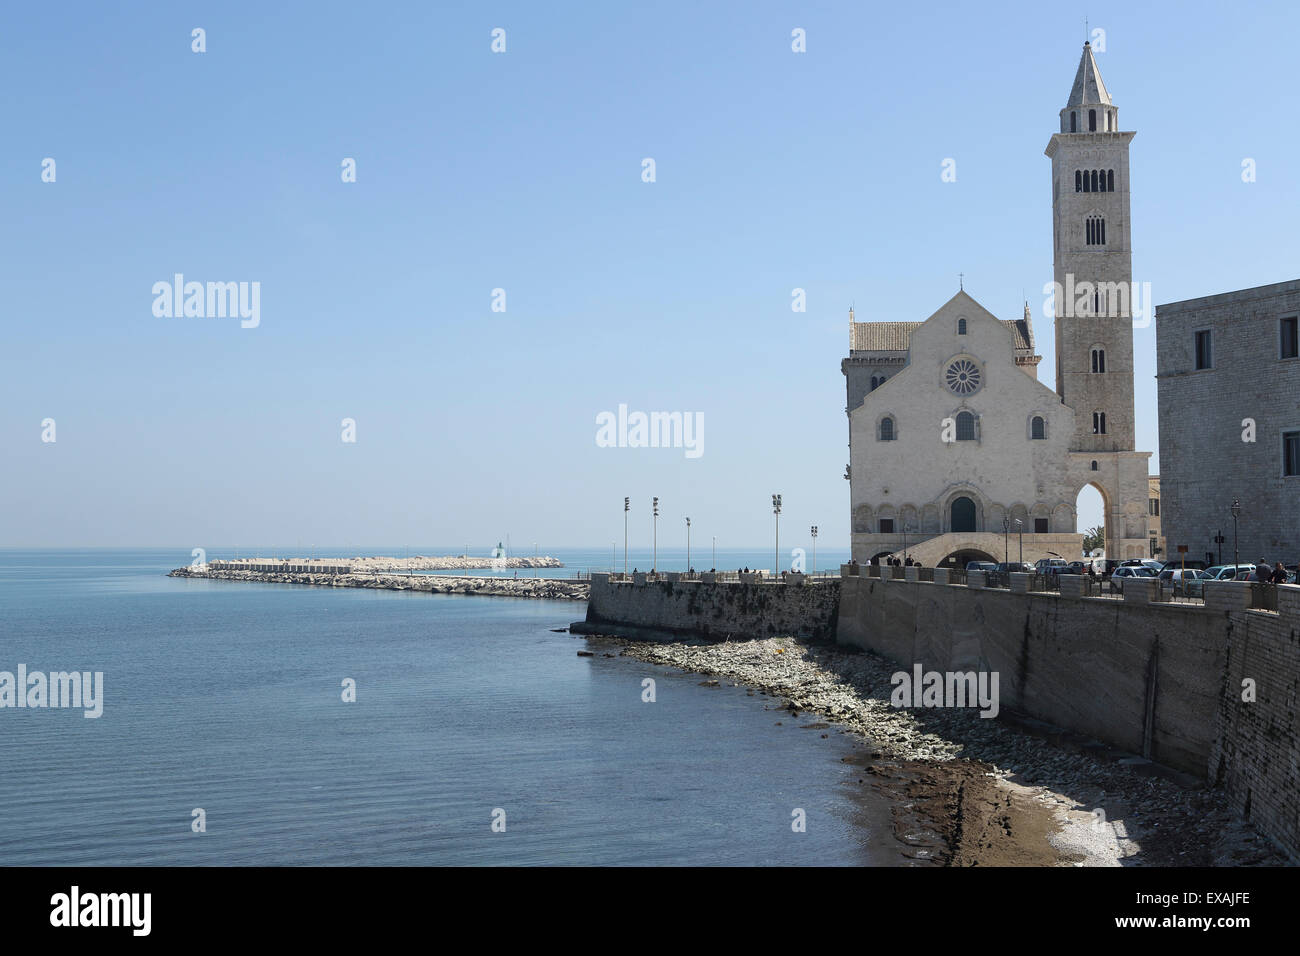 The Adriatic Sea, harbour wall and Cathedral of St. Nicholas the Pilgrim (San Nicola Pellegrino) in Trani, Apulia, Italy, Europe Stock Photo